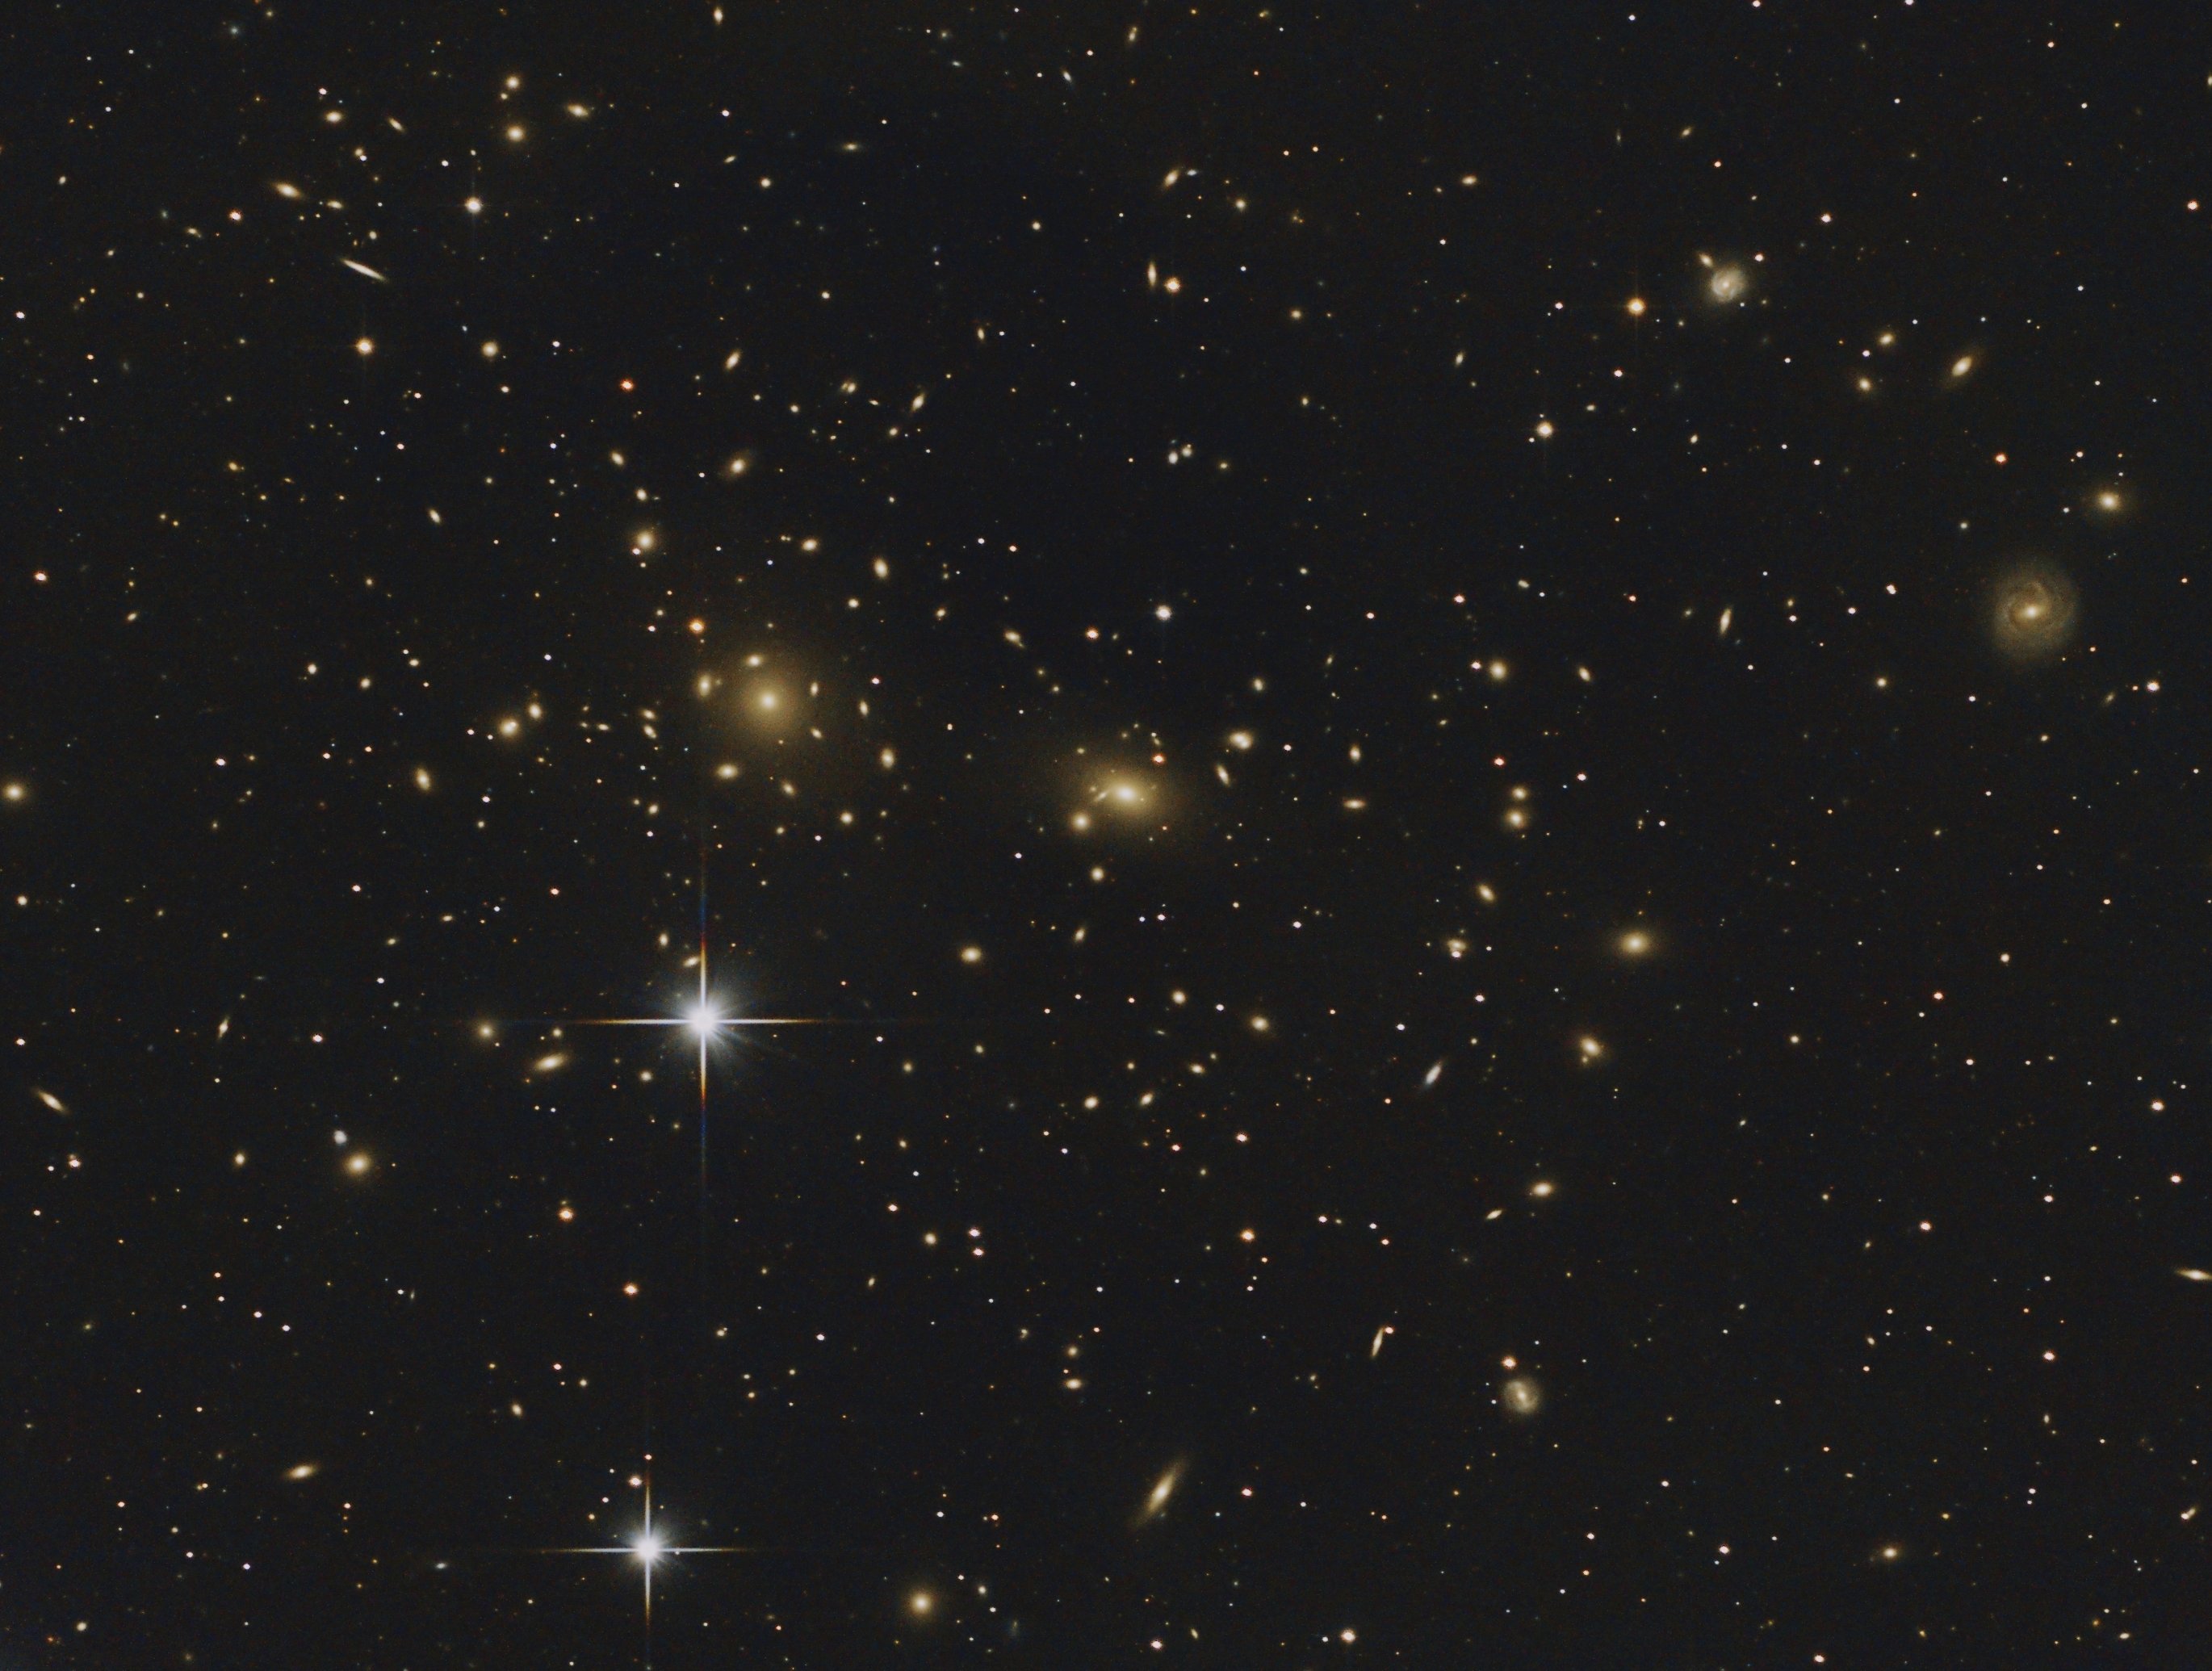 NGC4889_Newt_Lyme_Baader_14-160421_33x40s_plus_30 x 70s_gain124_plus_30%_brack_83x70s+41x40s_gain124_pixin_ABE_SCNR_PCC_MLT_TRANS_Curves_MLT_PX2_big_small.jpg